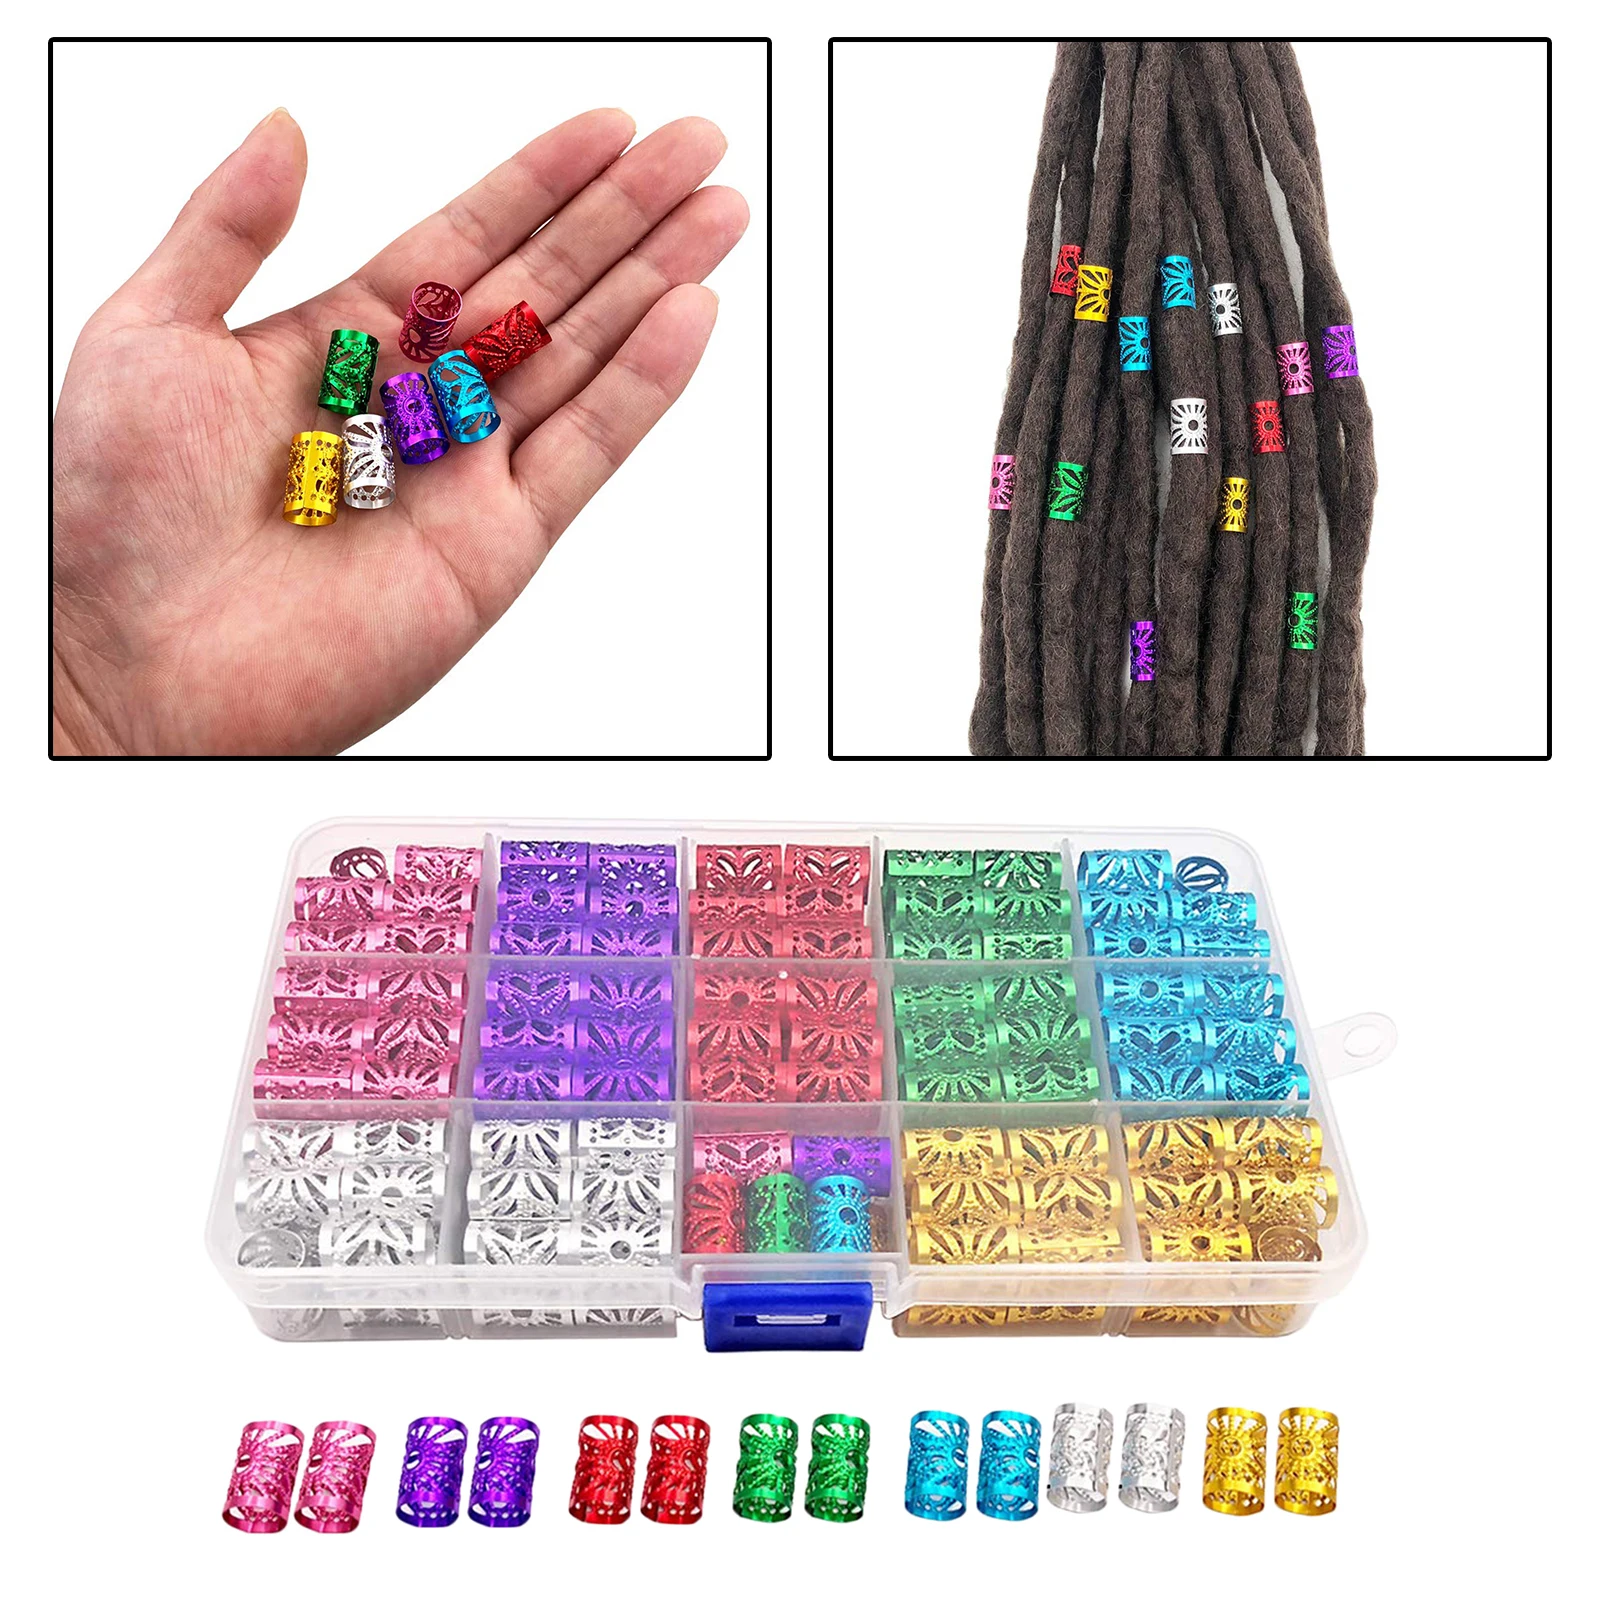 170Pcs Hair Braid Cuff Jewelry Braid Bead Hair Accessory Decor w/Storage Box Colorful Braides Dreadlock Decorations